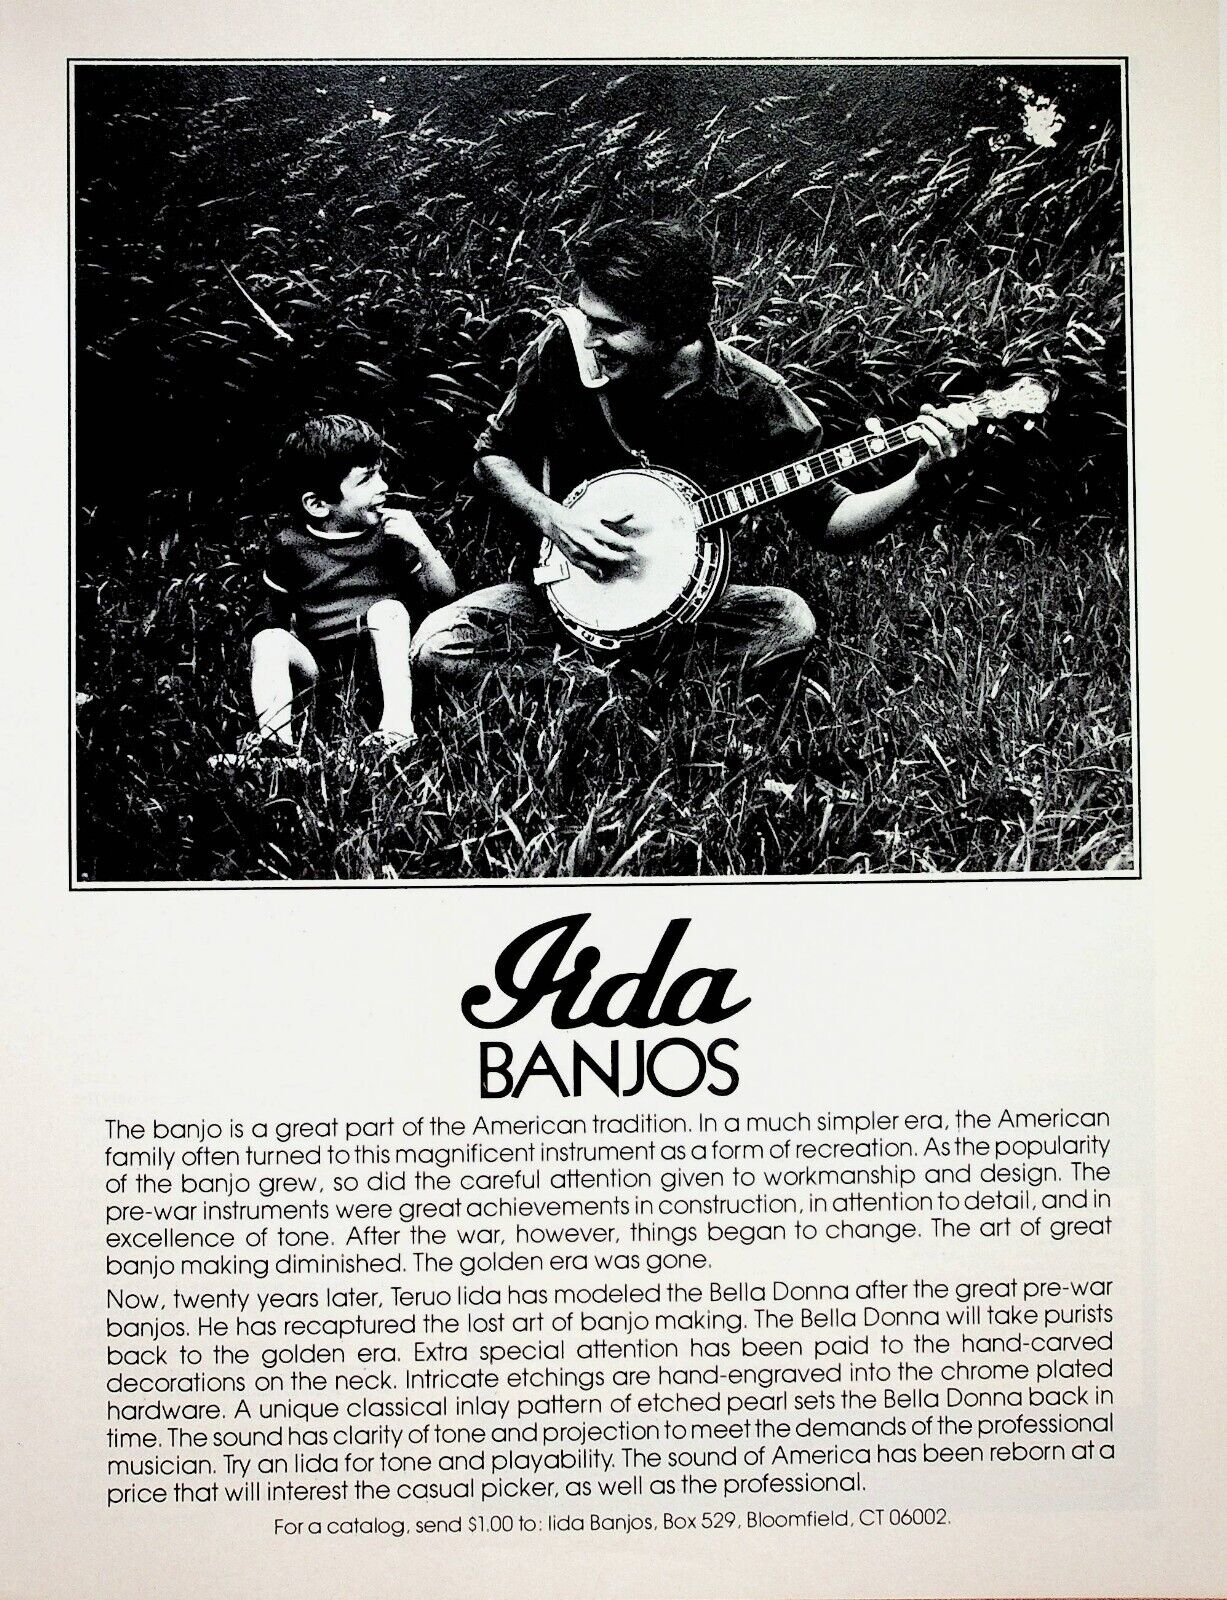 1978 Teruo Iida Bella Donna Banjo - Vintage Print Advertisement